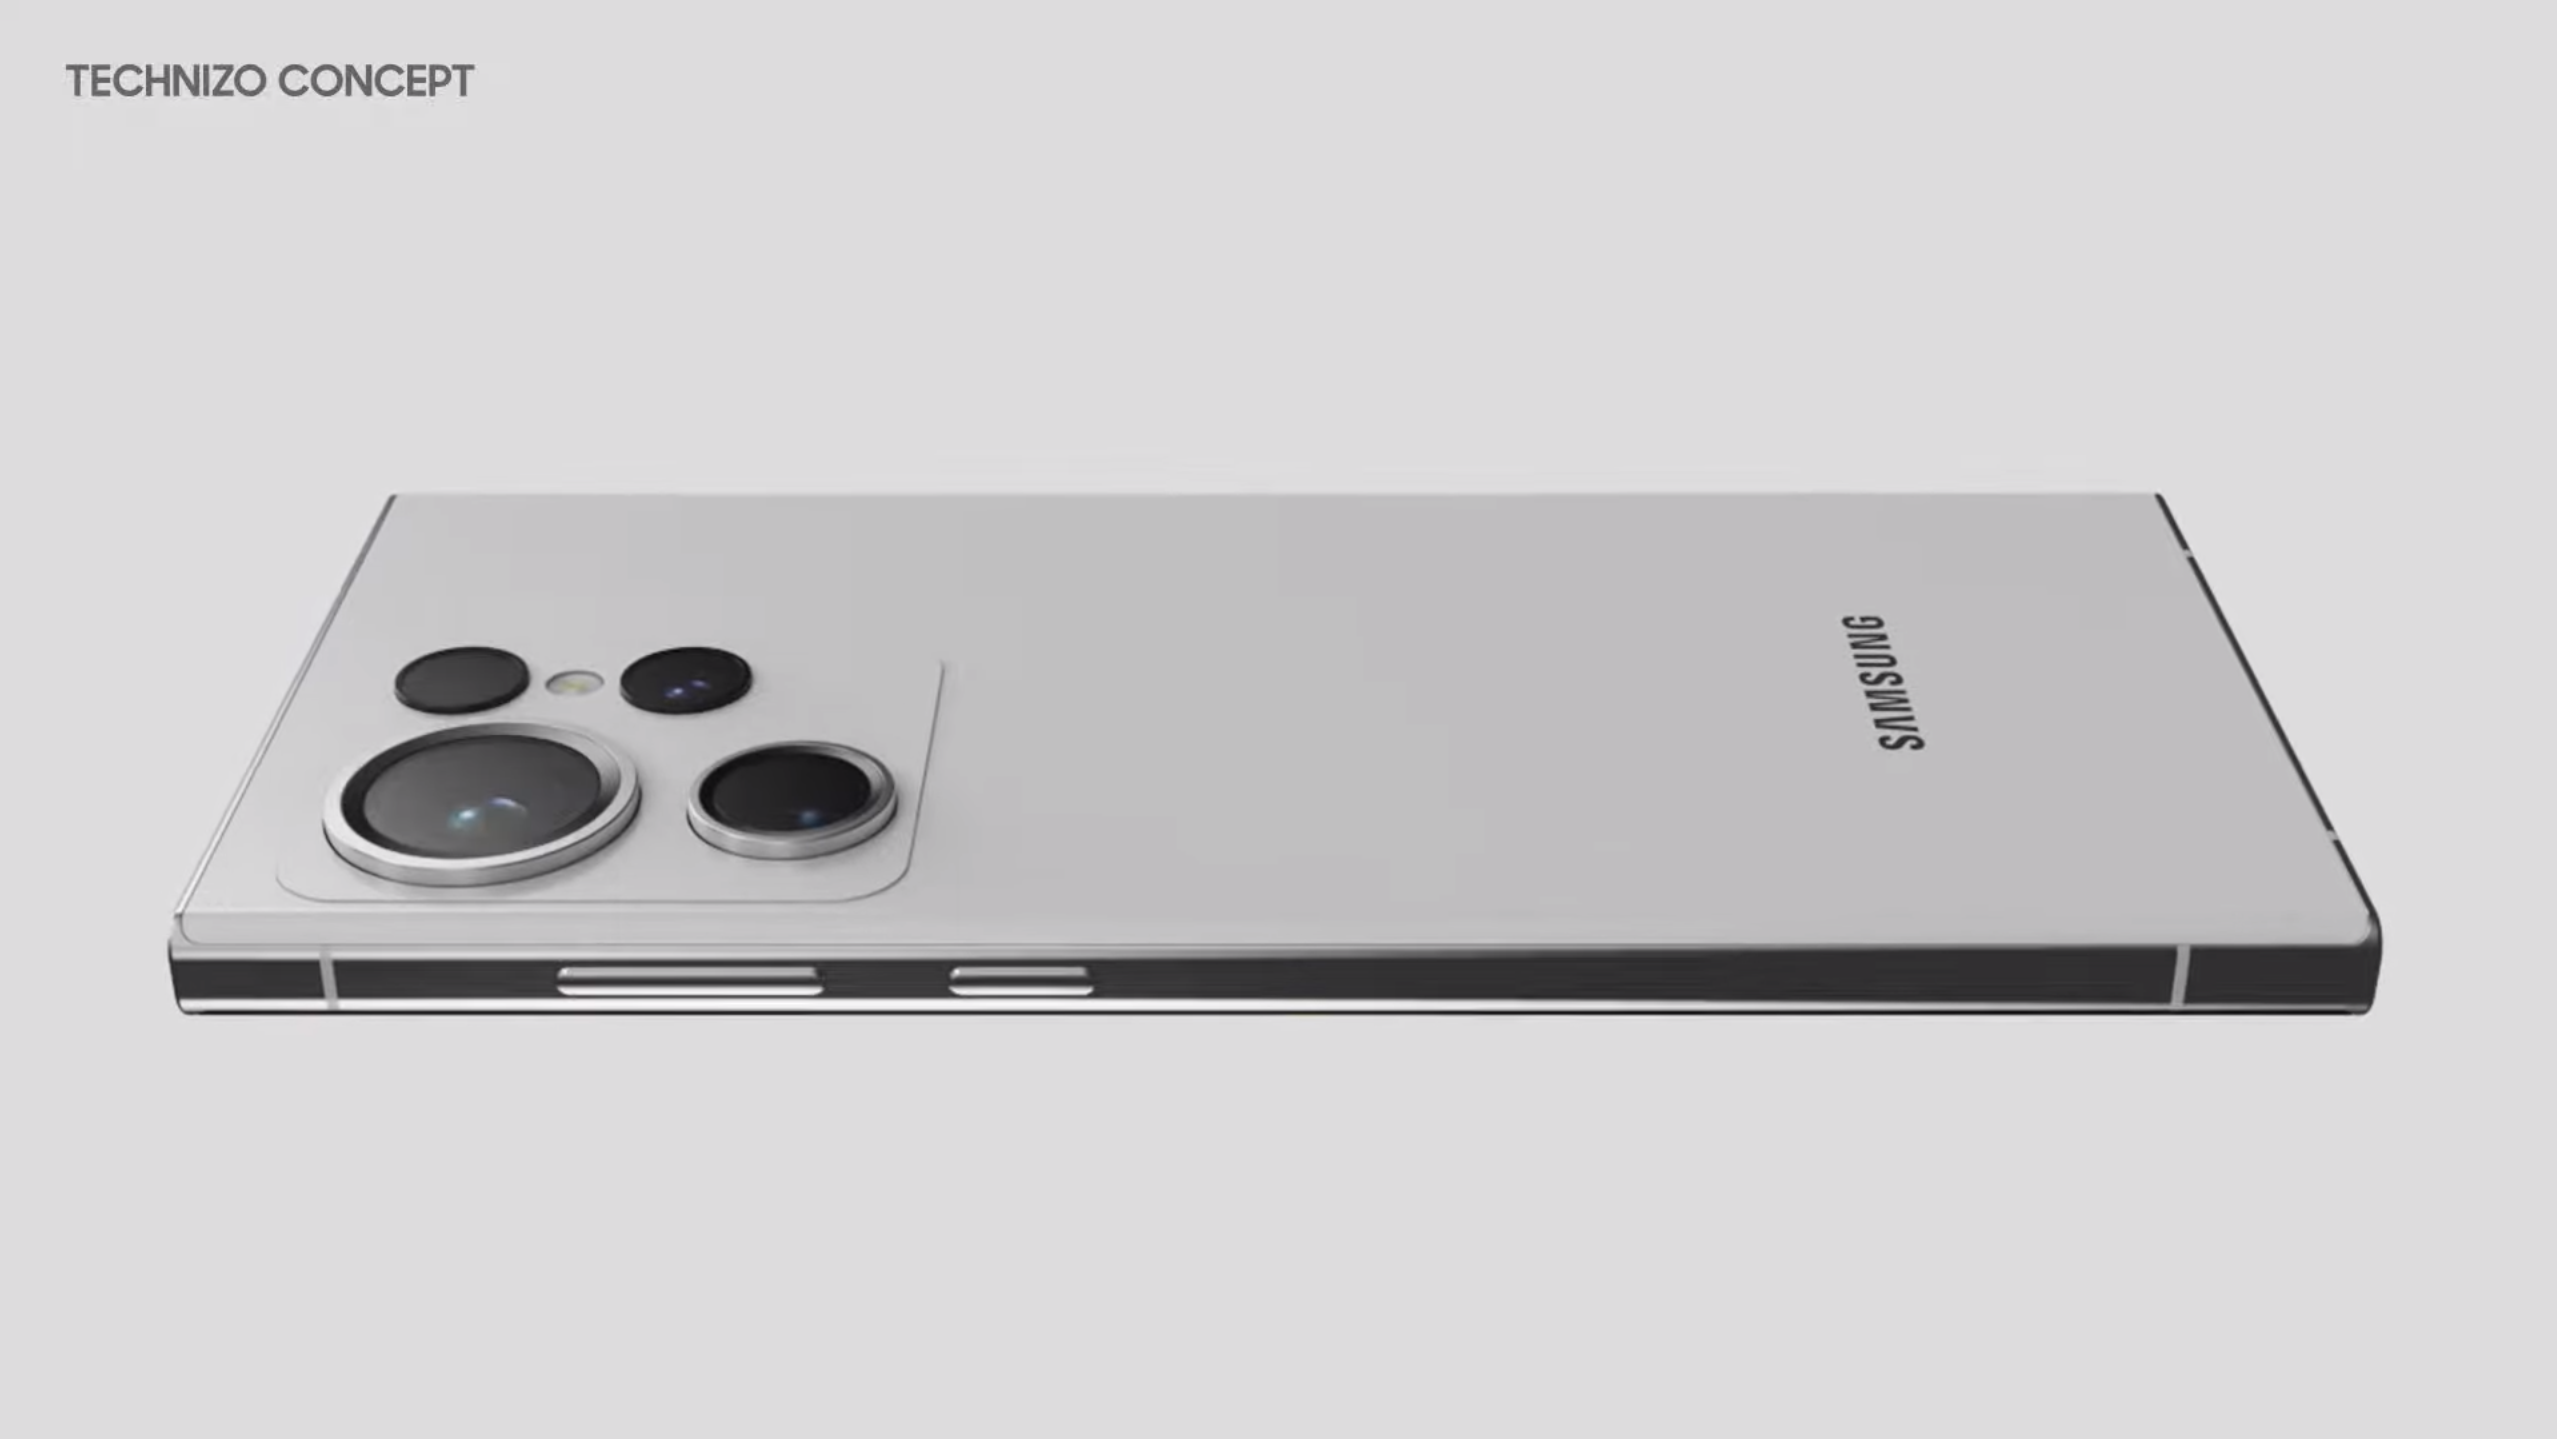 Samsung Galaxy S24 Ultra — everything we know so far